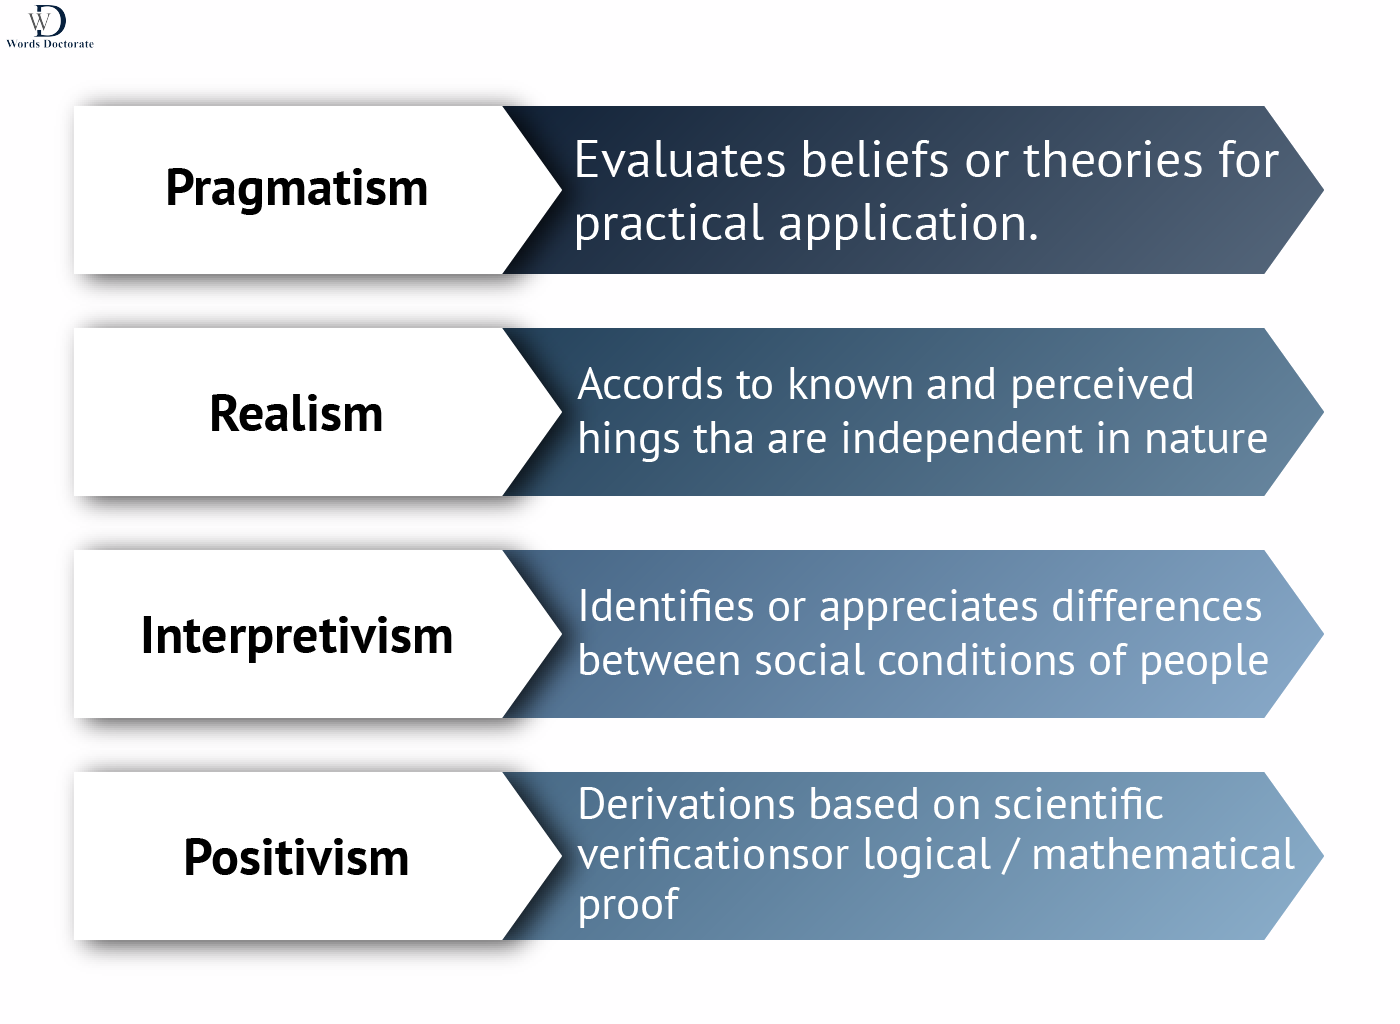 Pragmatism, Realism, Interpretivism, and Positivism